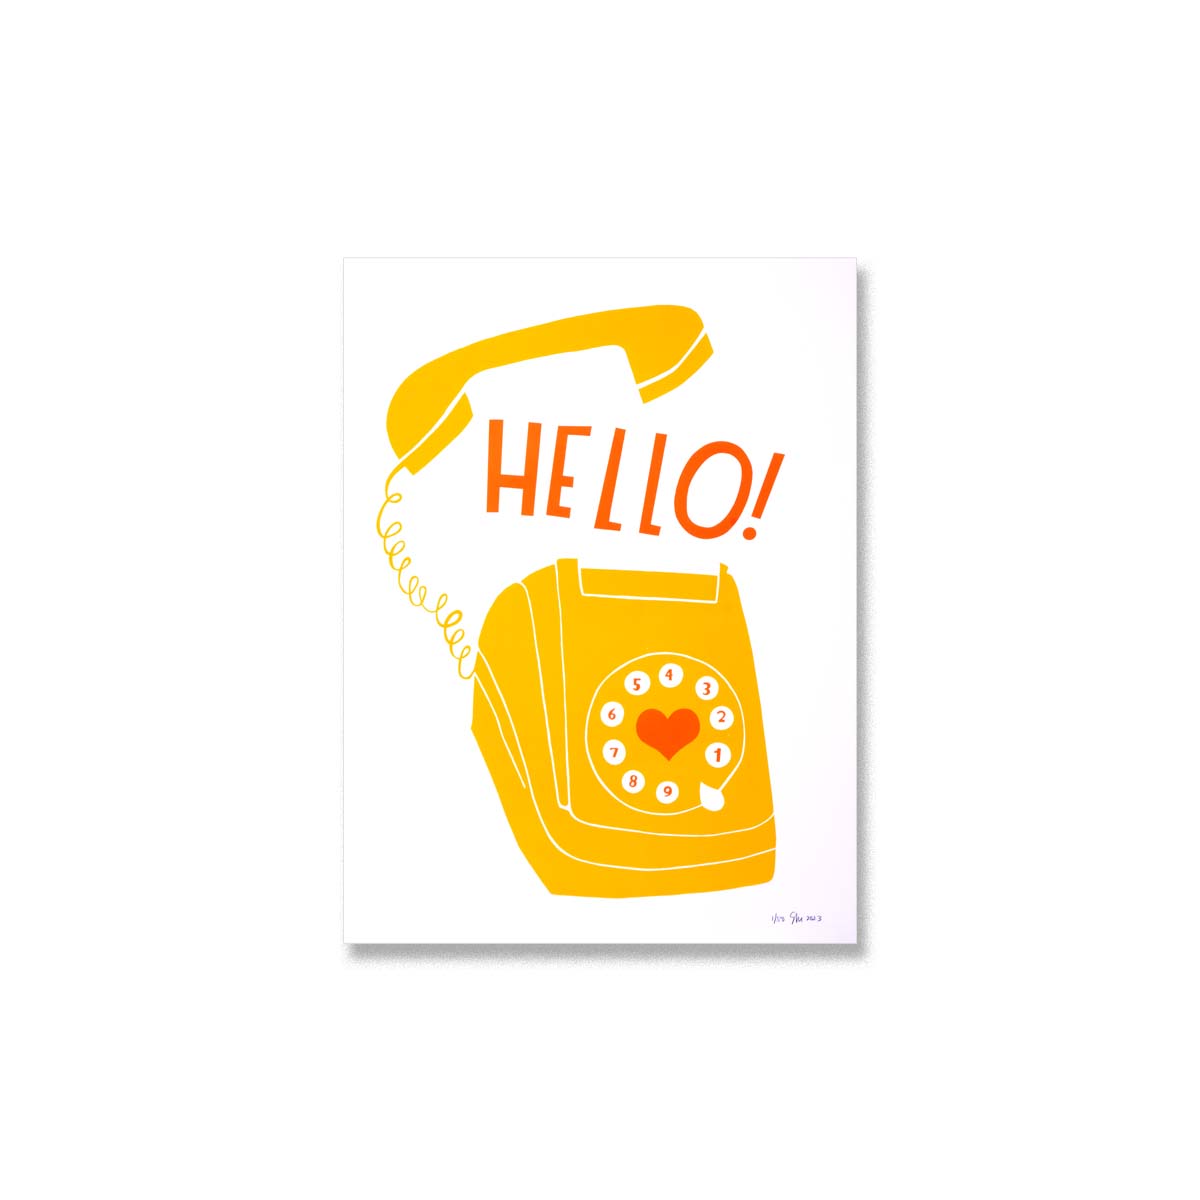 Hello! - Limited Edition Serigraph